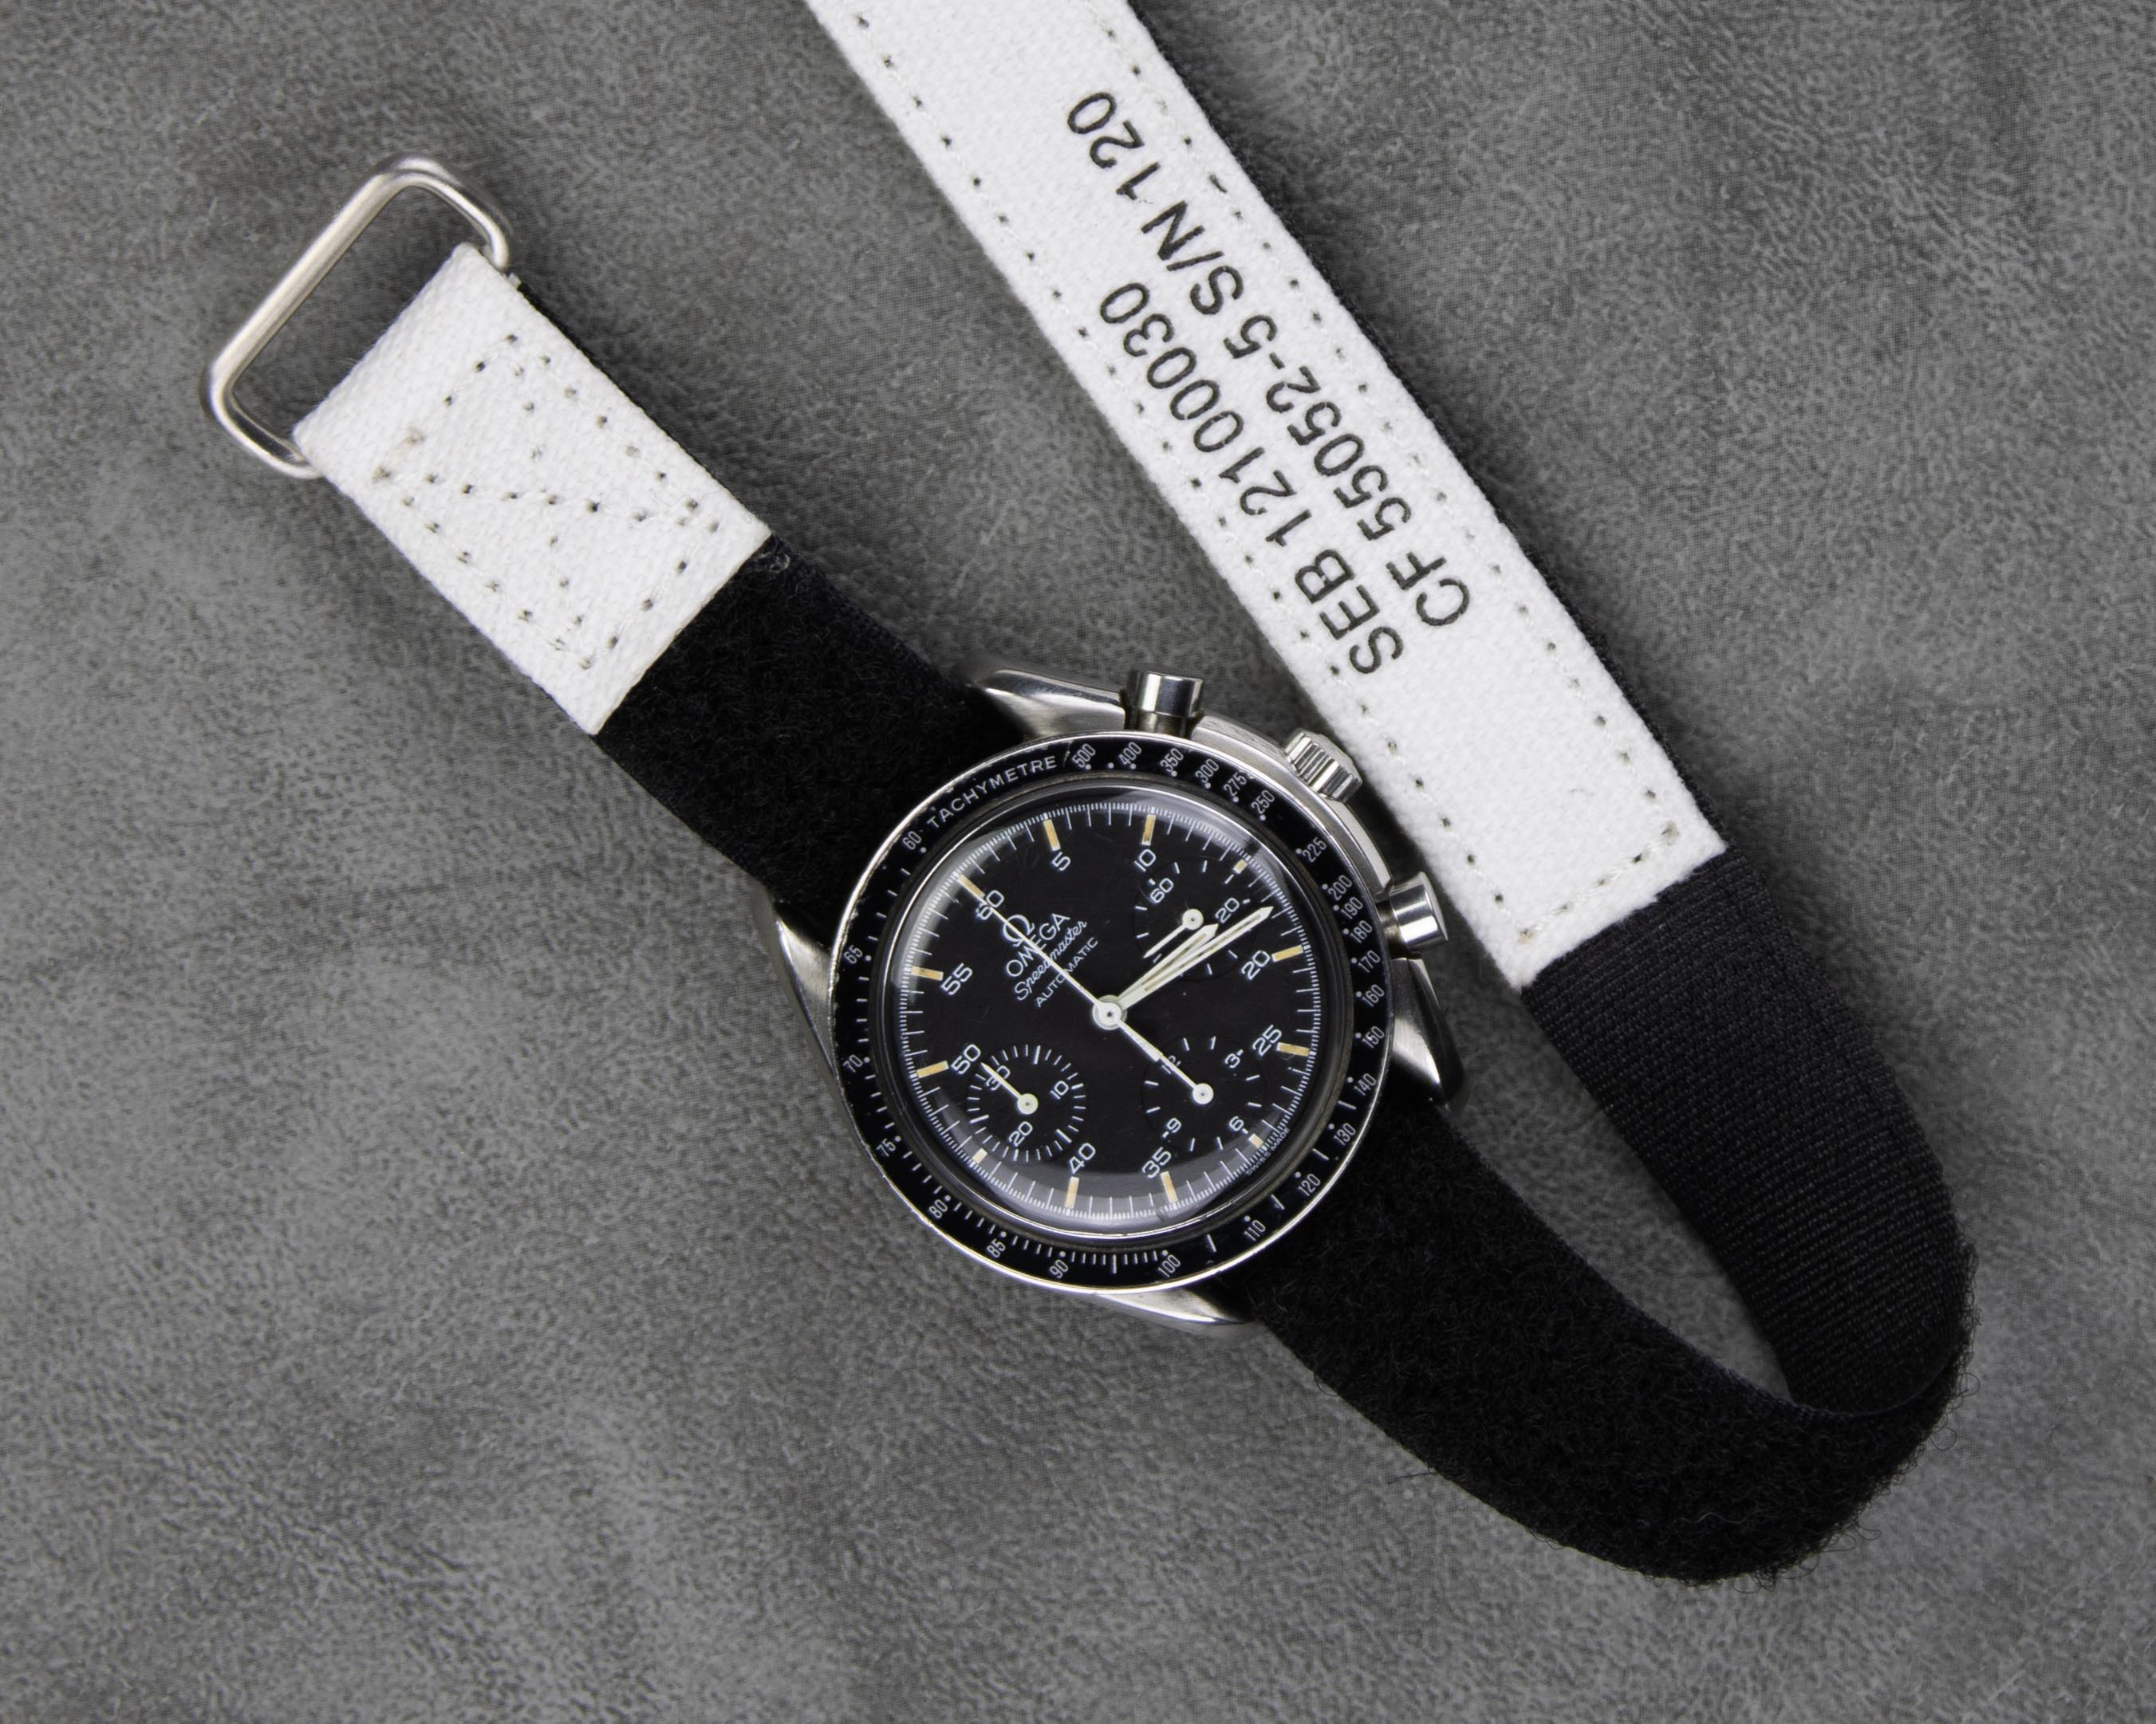 White NASA velcro watch strap on a Omega Speedmaster